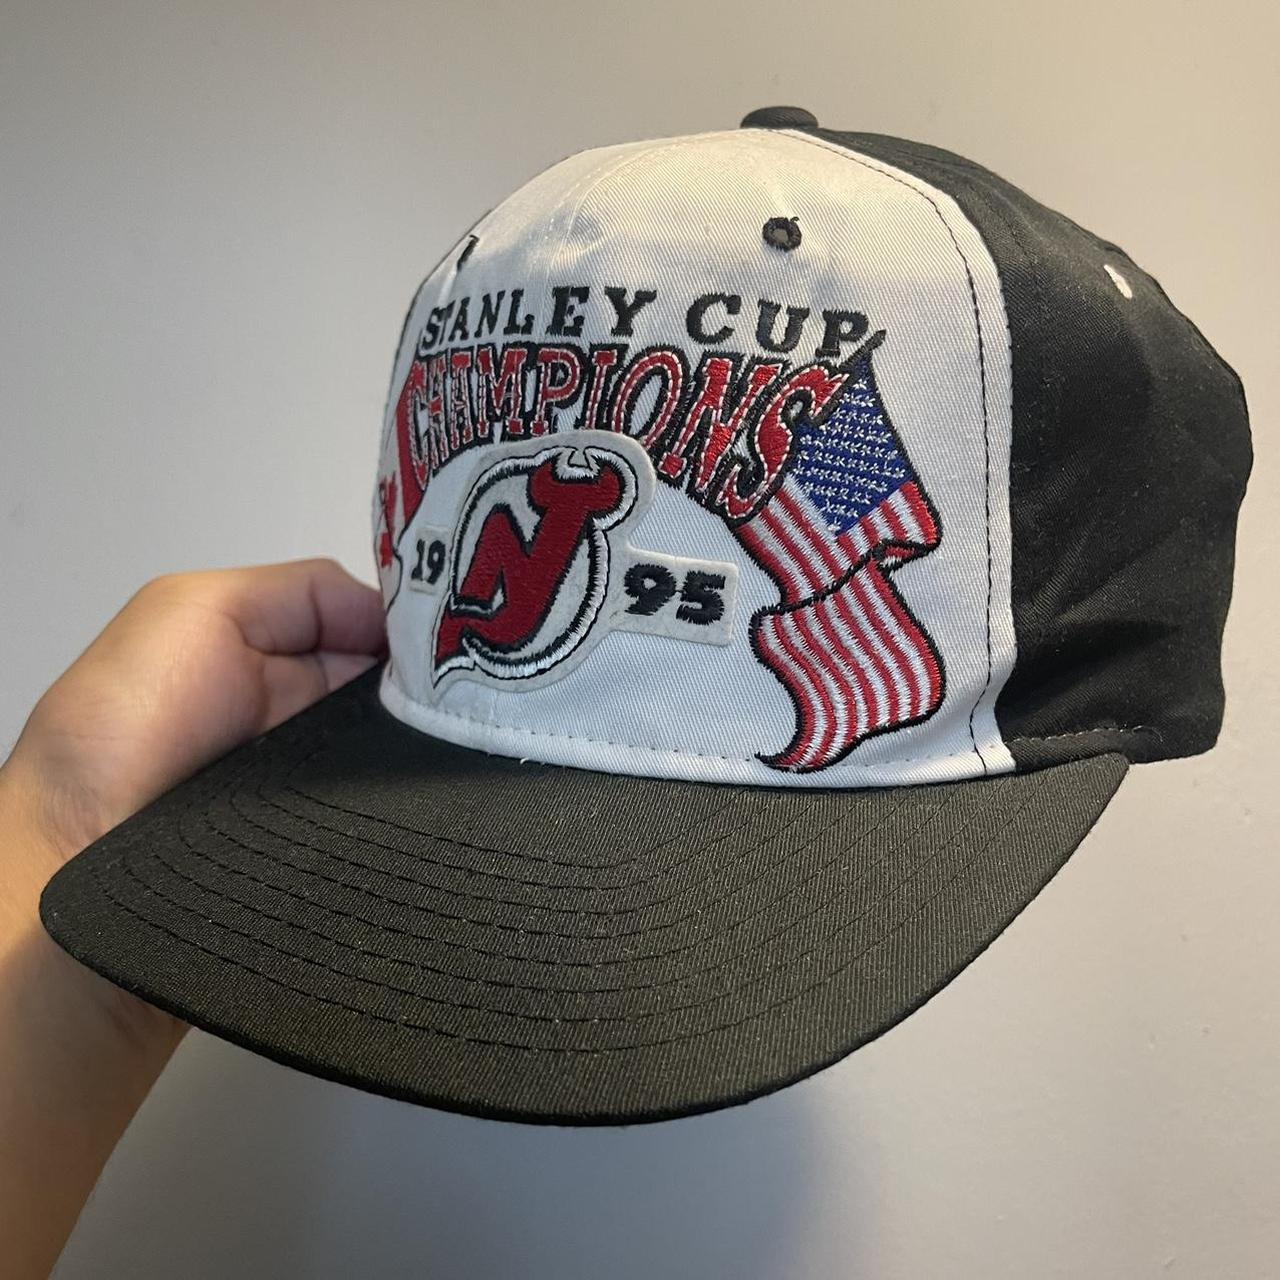 1995 New Jersey Devils Stanley Cup Champs Starter NHL Snapback Hat